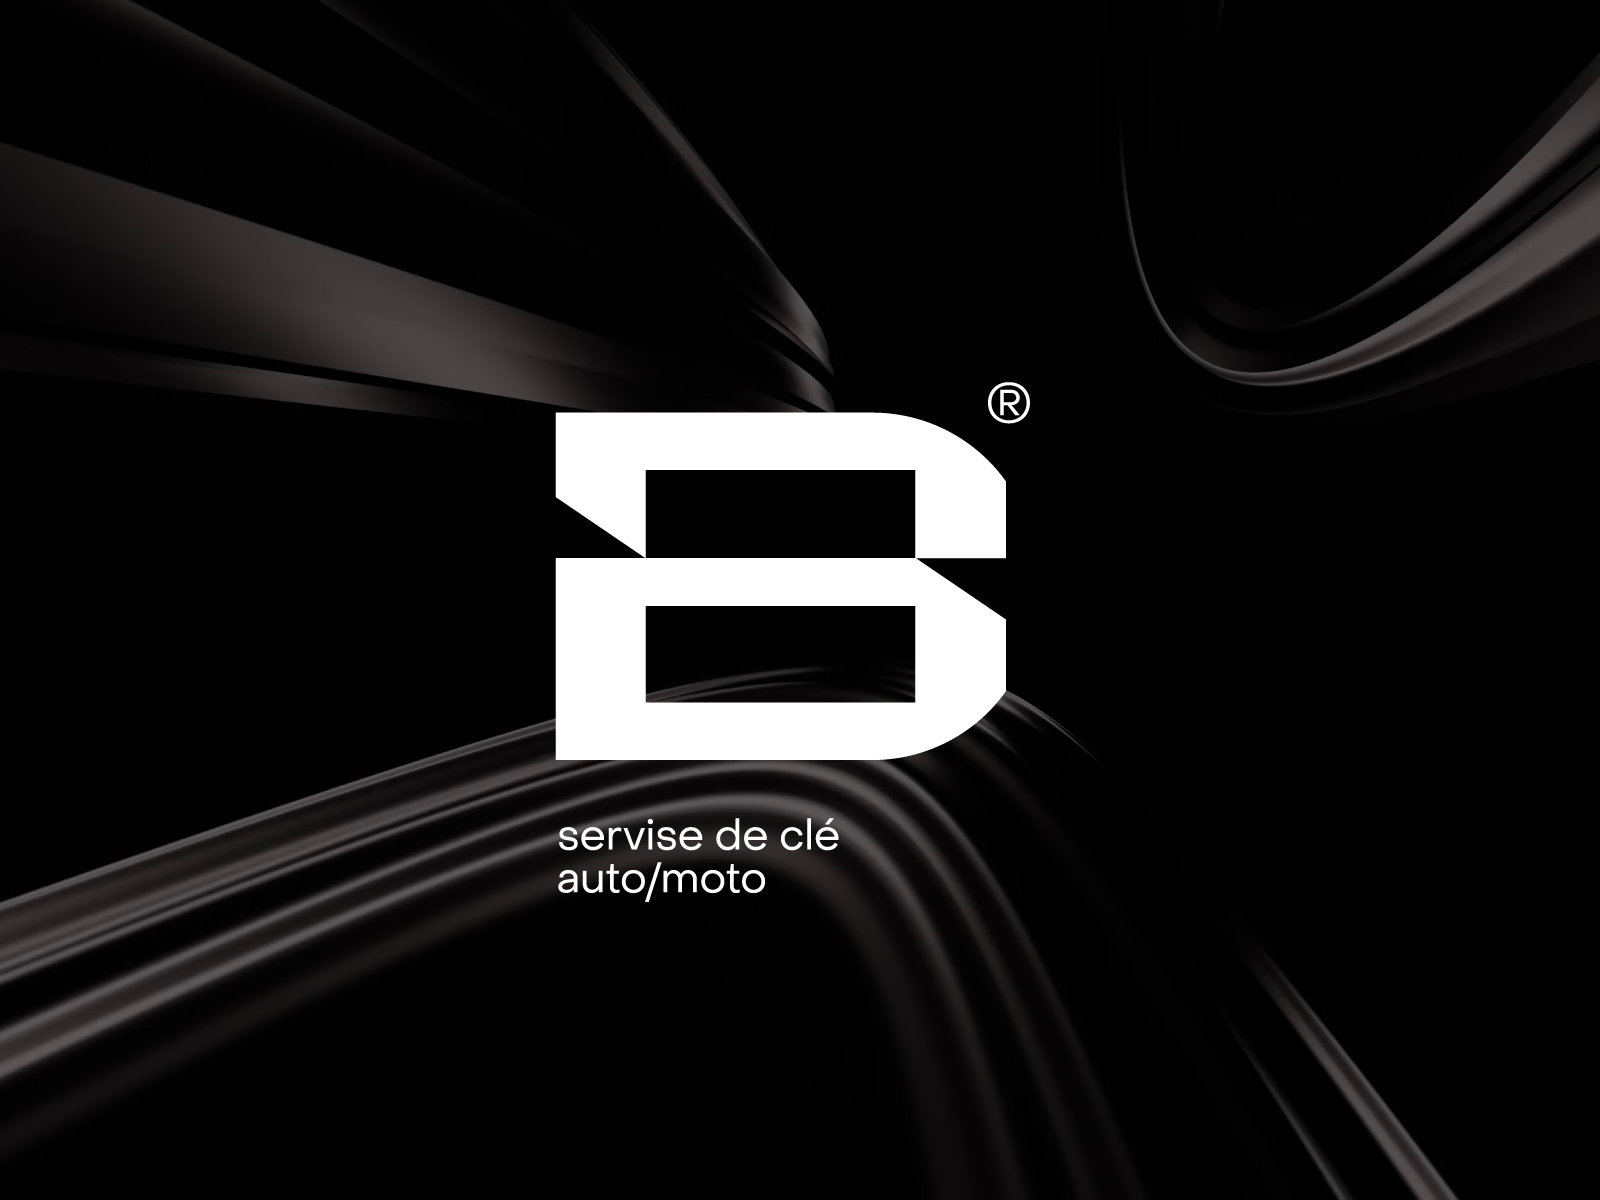 ByMyCle logo option by Nick Zotov on Dribbble